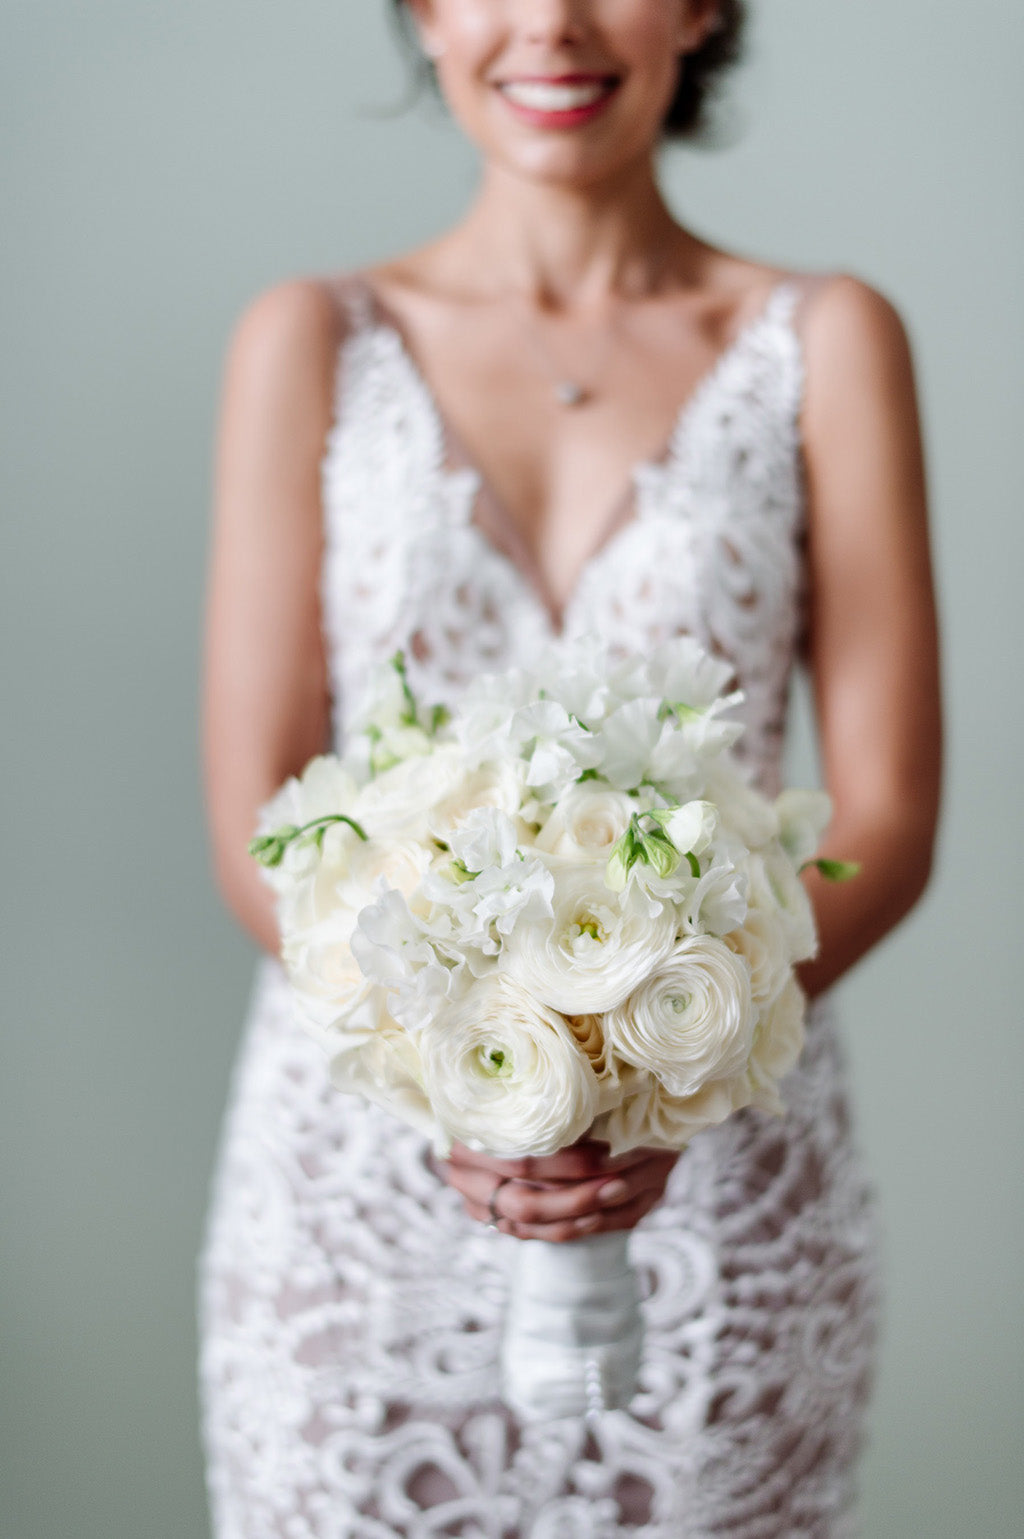 Bride holding white bridal bouquet wedding flowers